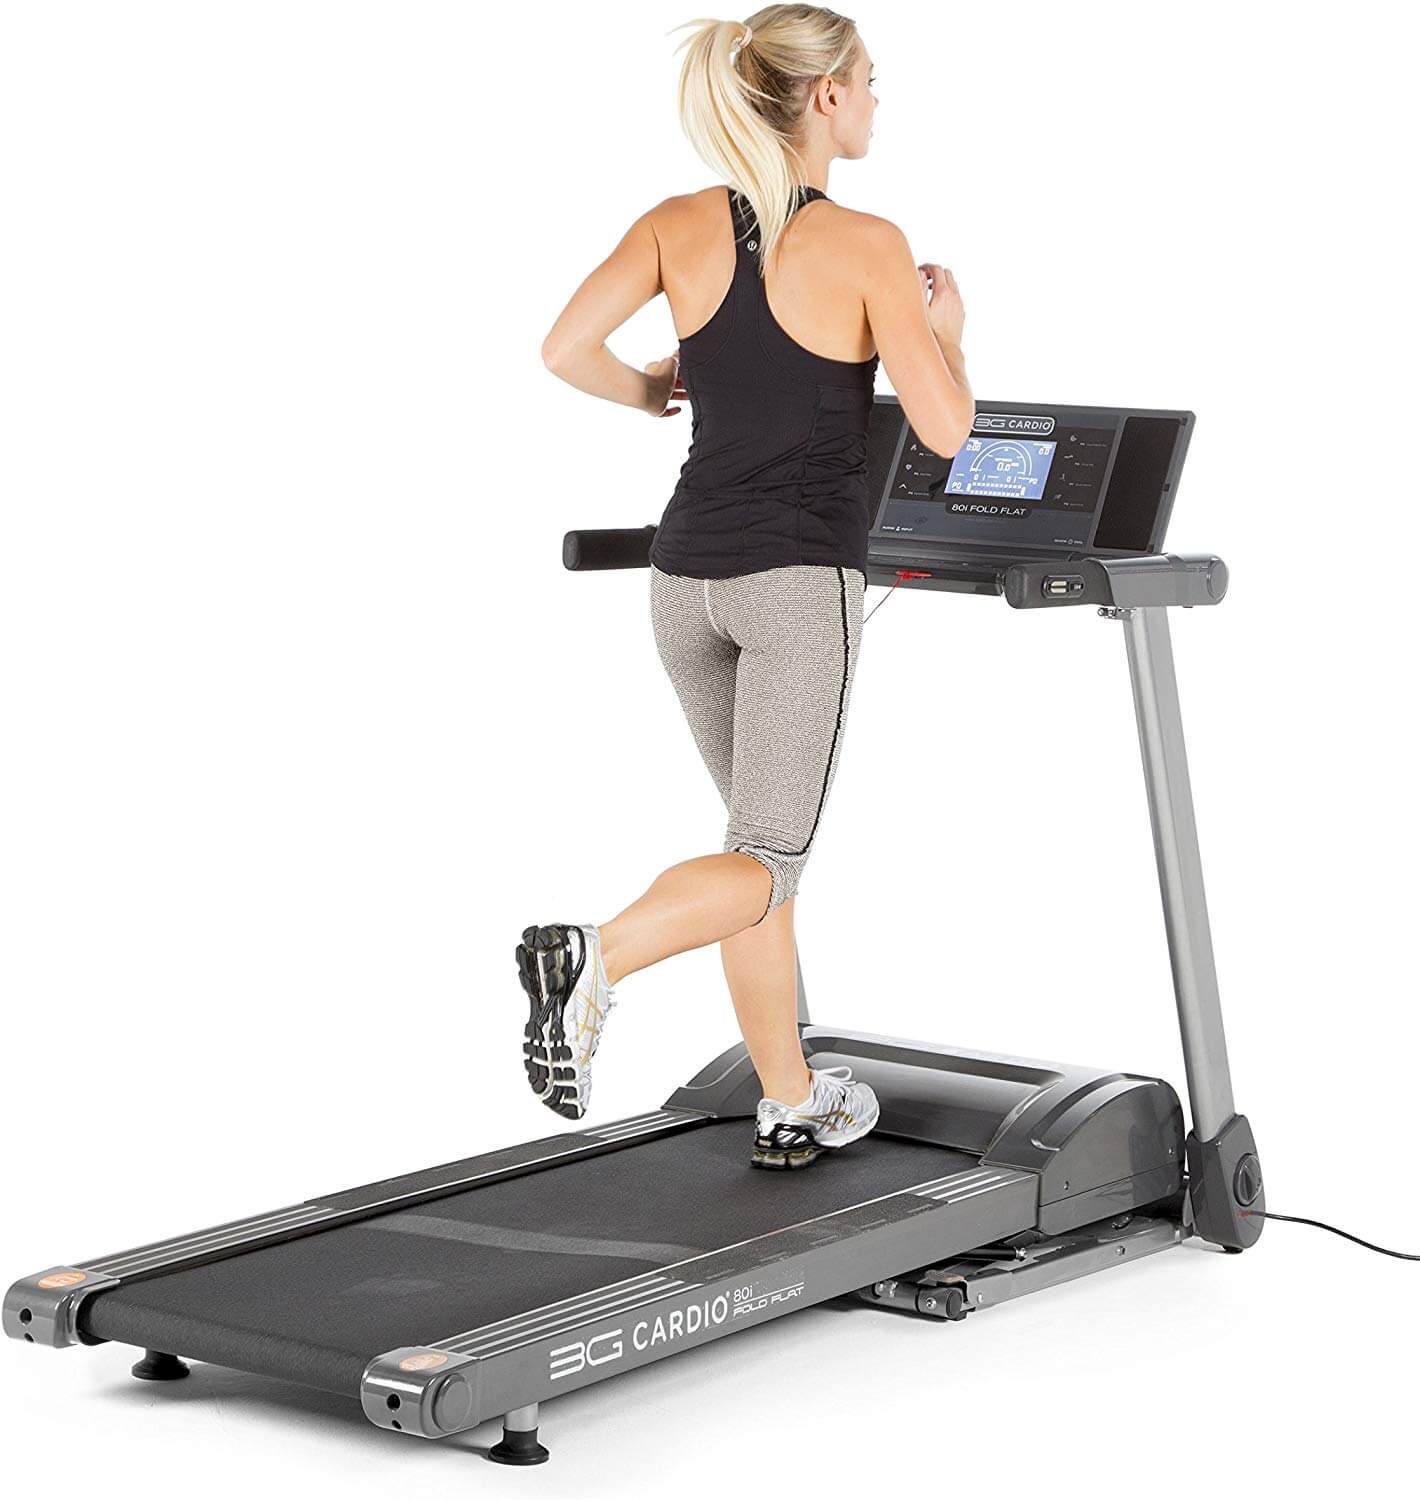 3G Cardio 80i treadmill Fold Flat Incline Treadmill